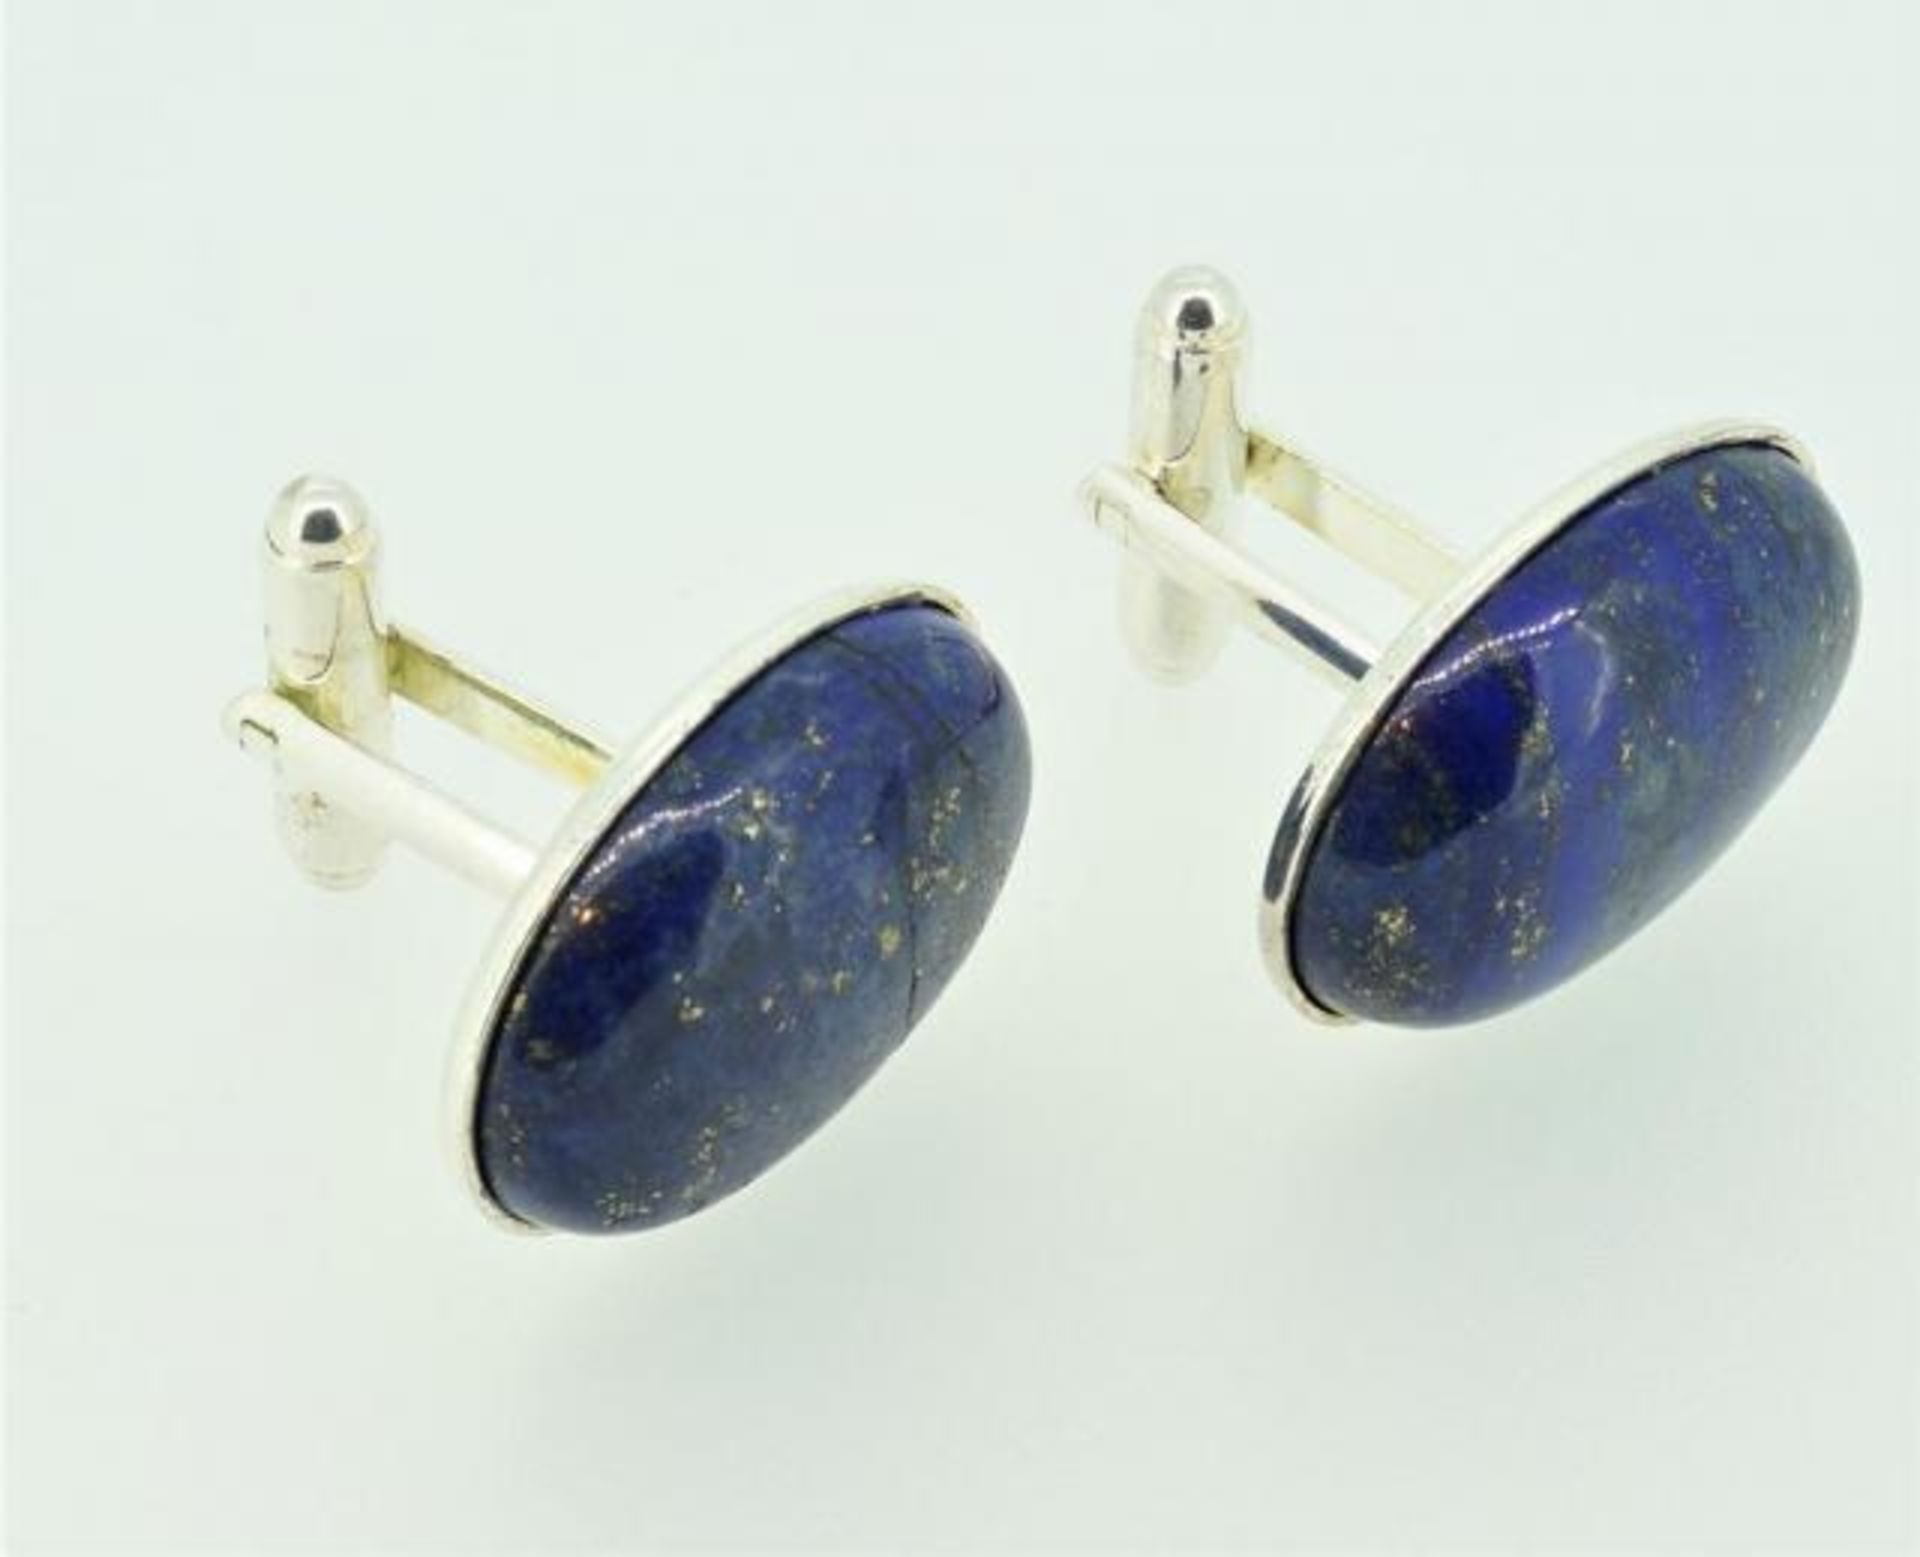 Cufflinks, set with lapis lazuli